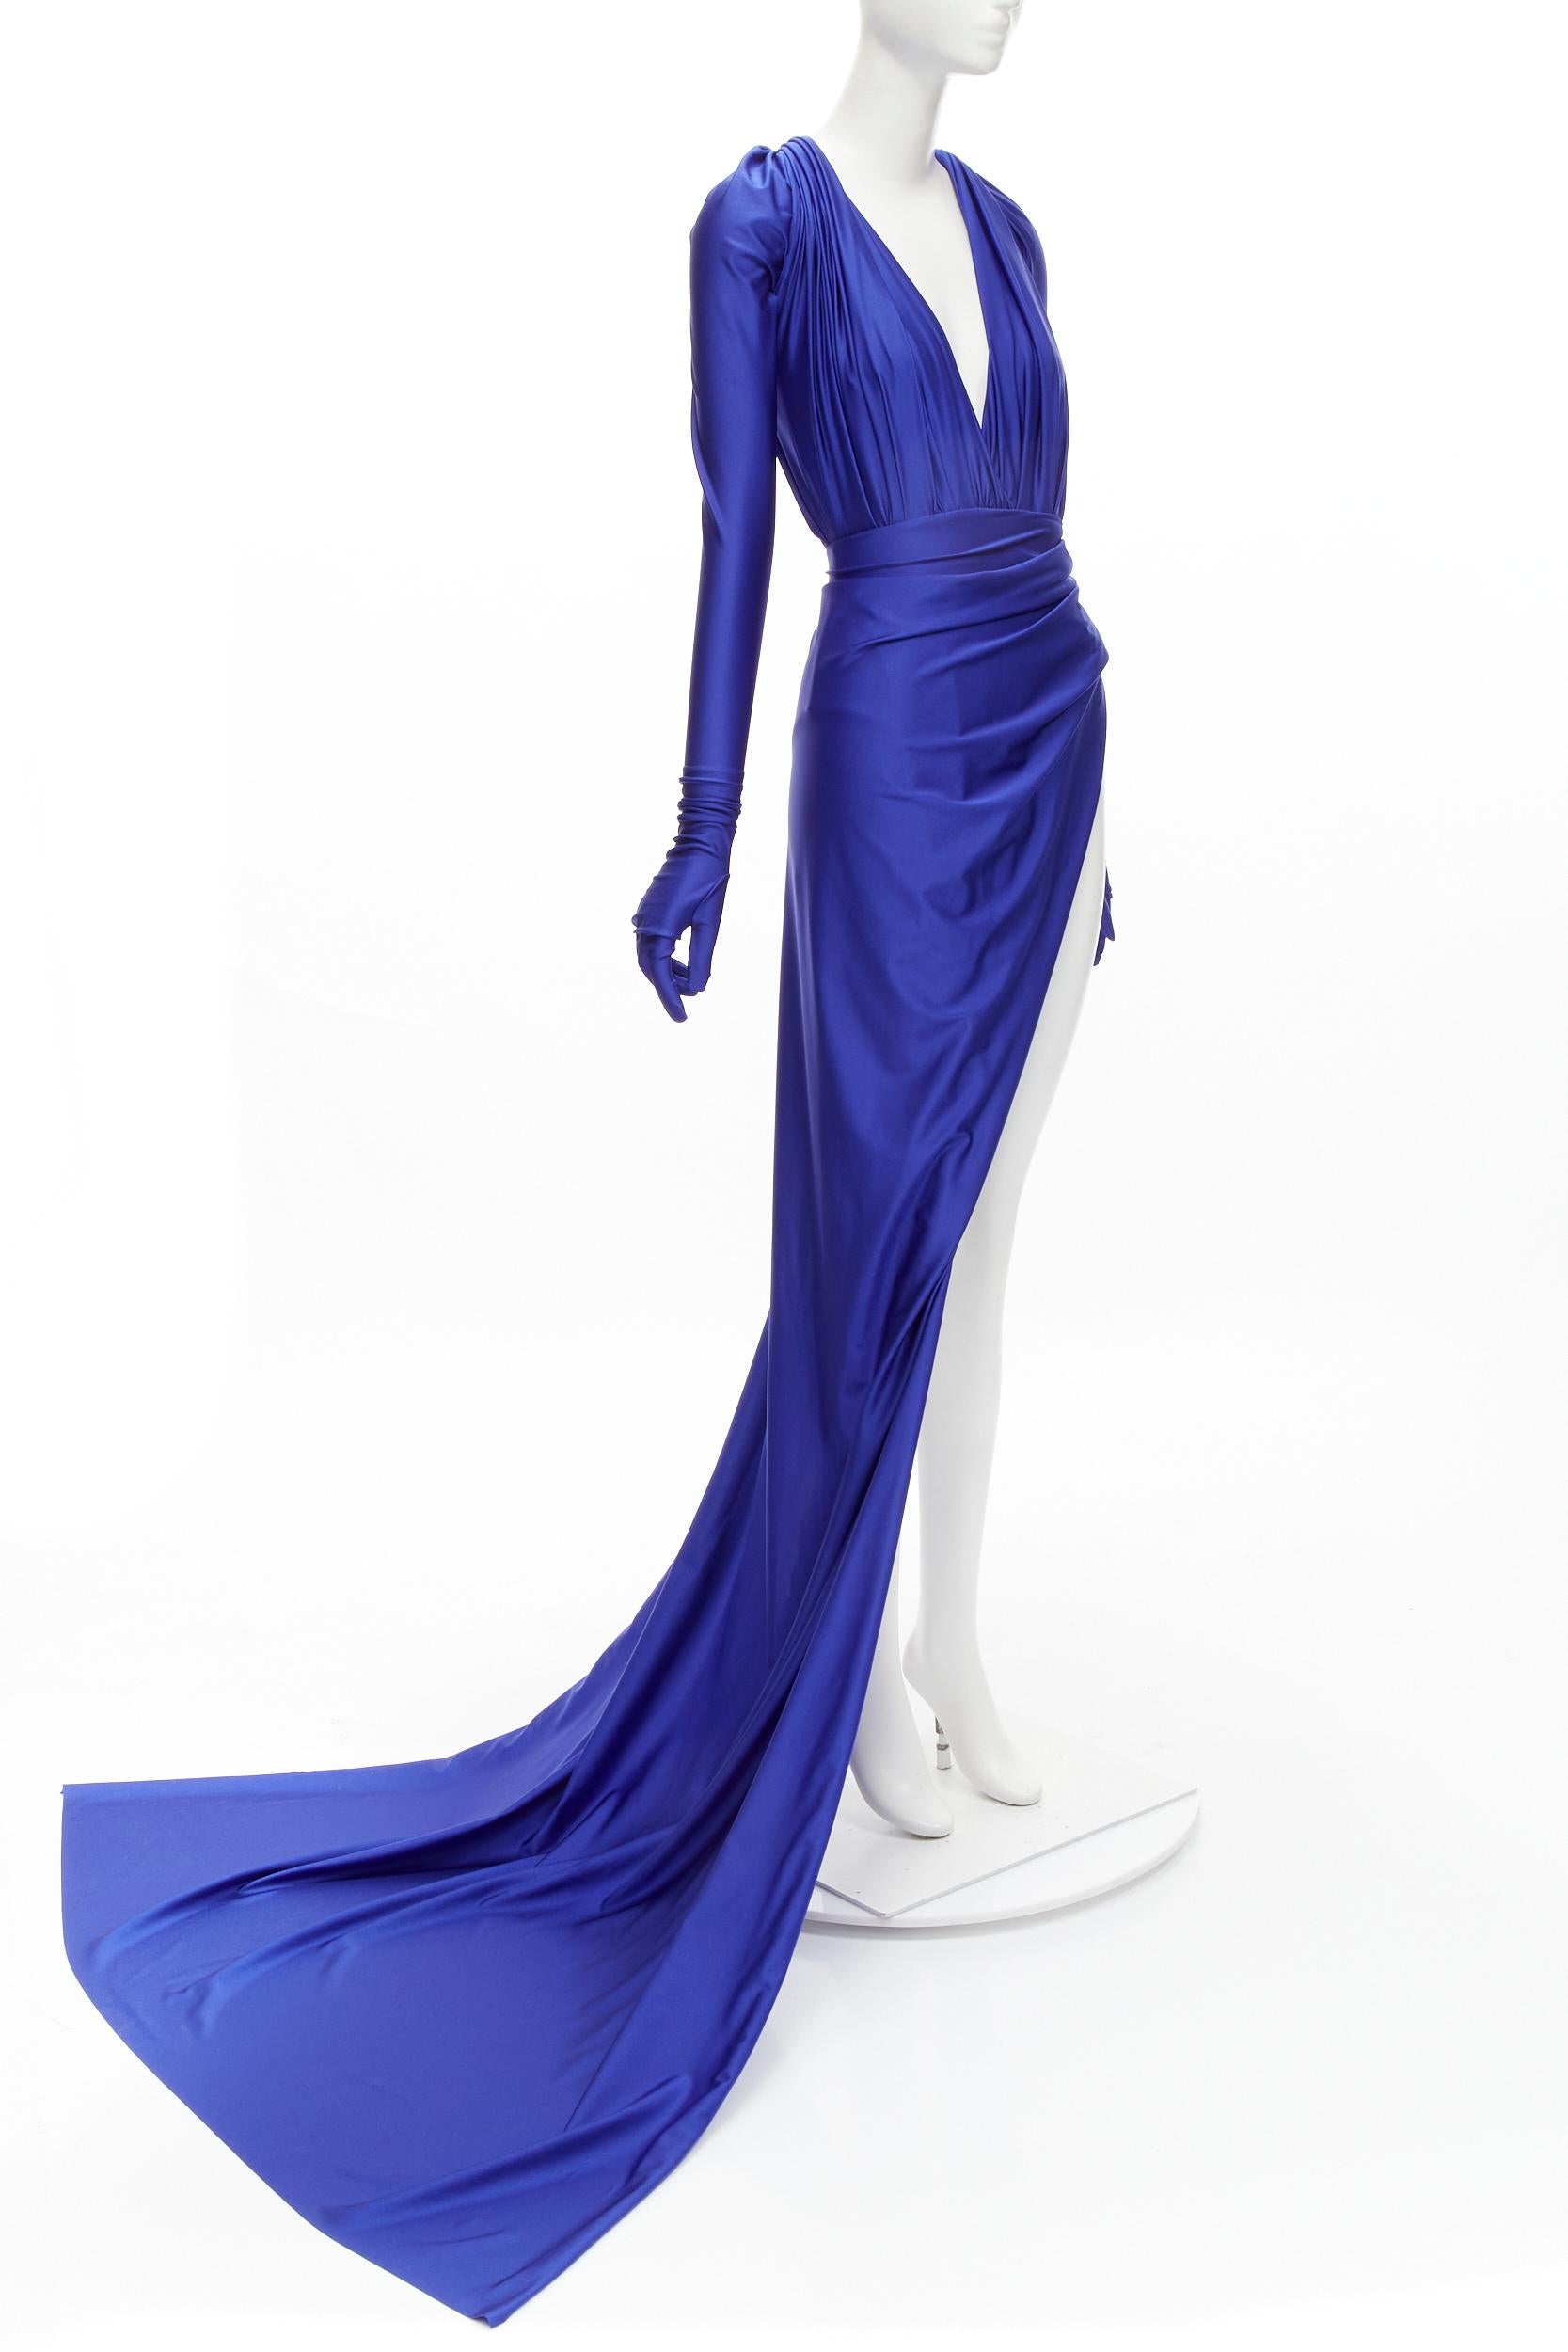 BALENCIAGA 2020 Demna Kim Kardashian cobalt blue gown with gloves FR36 S
Reference: TGAS/C01829
Brand: Balenciaga
Designer: Demna
Collection: 2020
As seen on: Kim Kardashian
Material: Polyamide, Elastane
Color: Blue
Pattern: Solid
Closure: